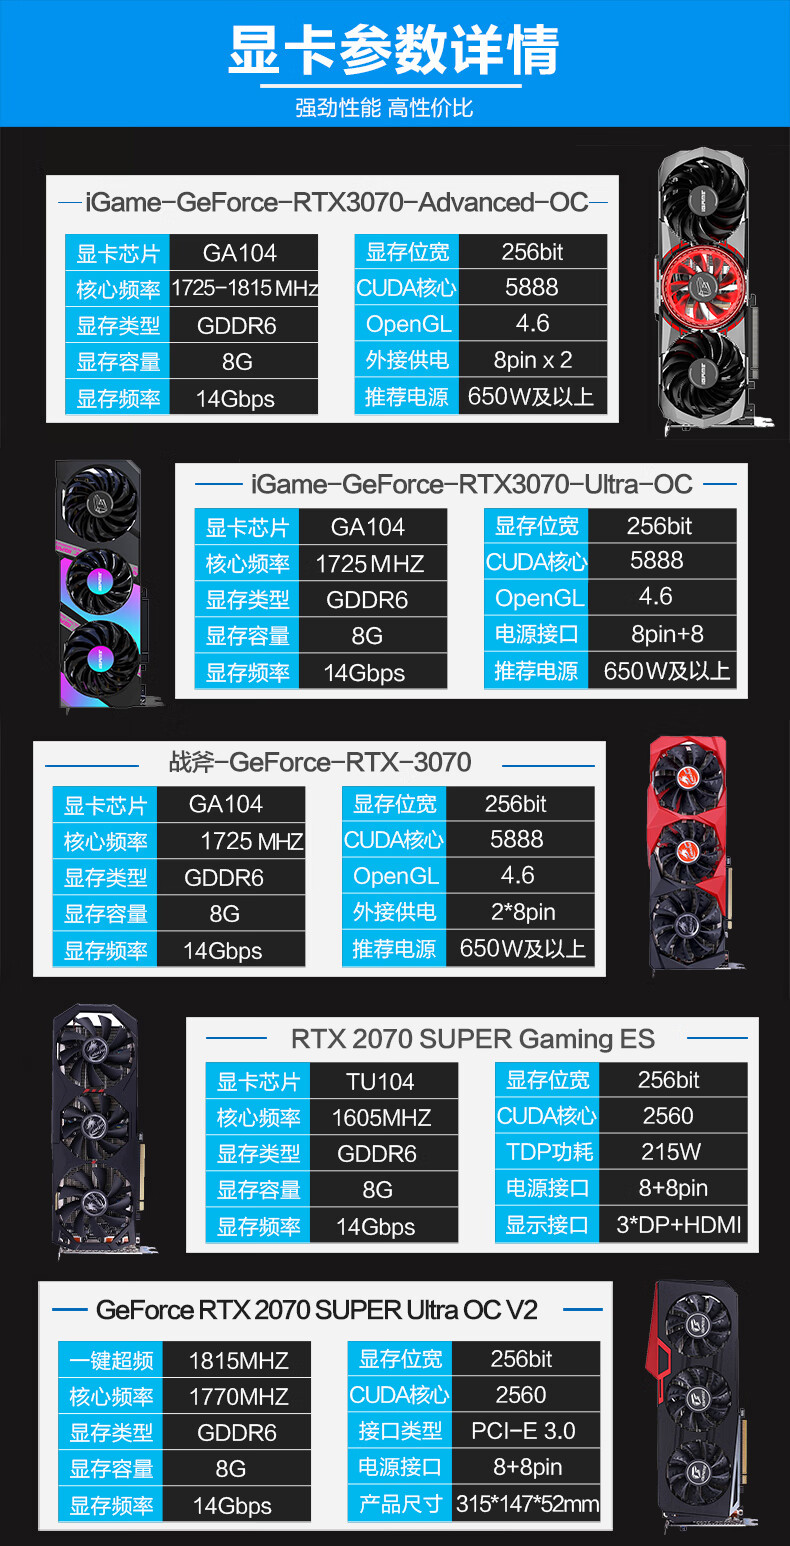 DDR3 vs DDR4显卡：性能、功耗、价格全面对比  第4张